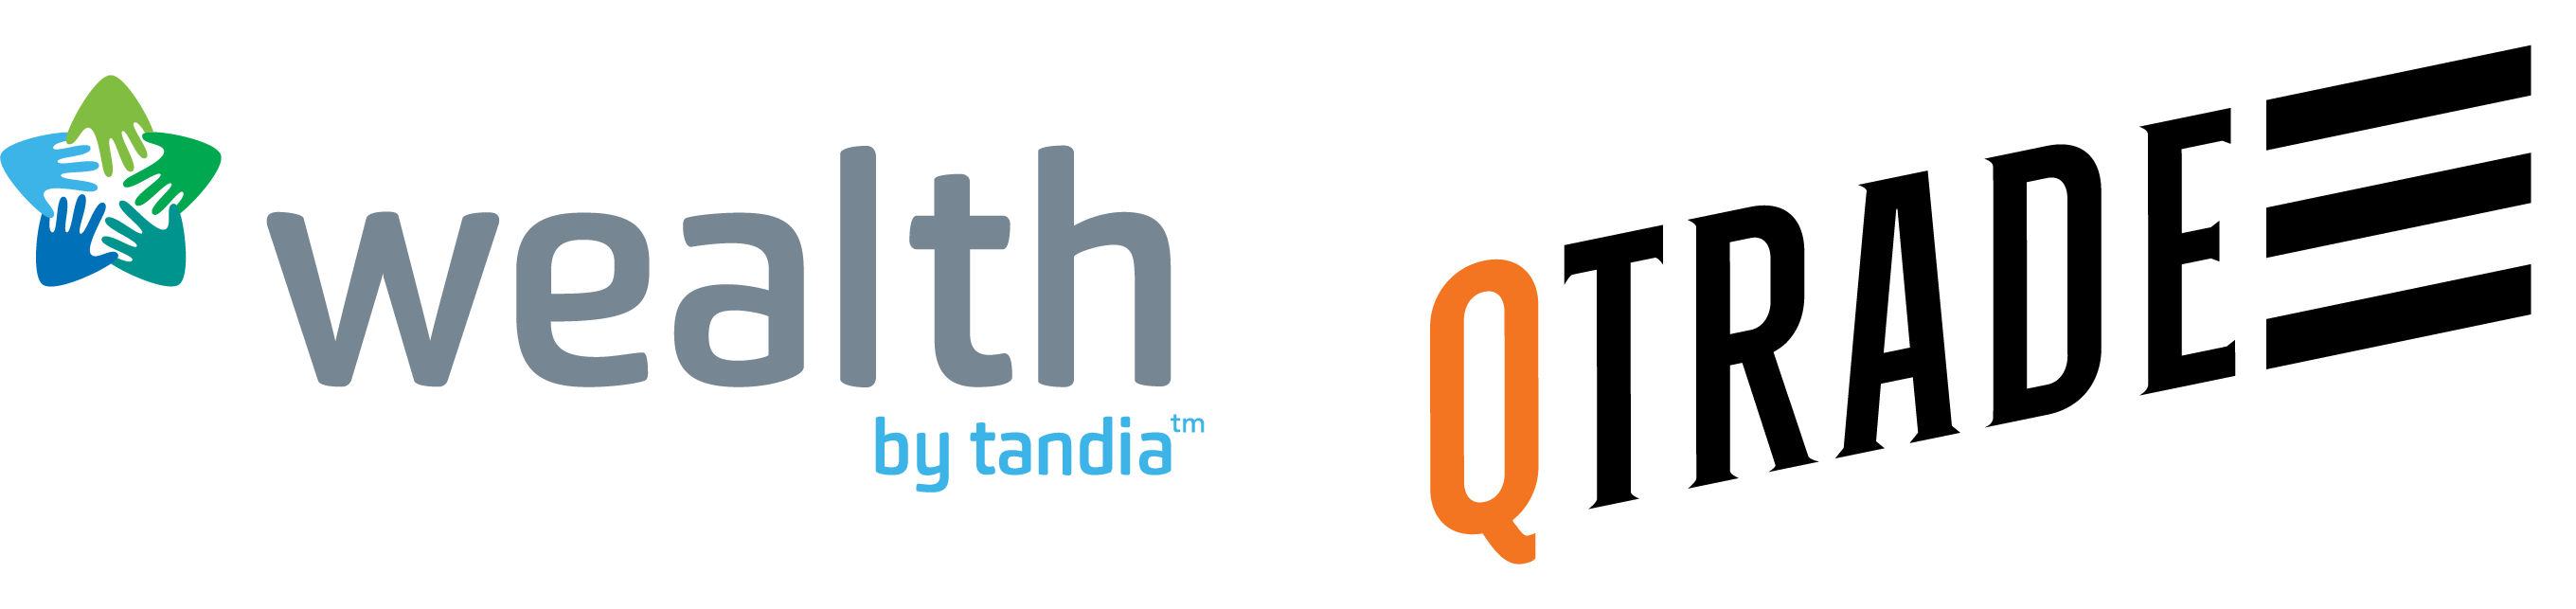 wealth qtrade logo